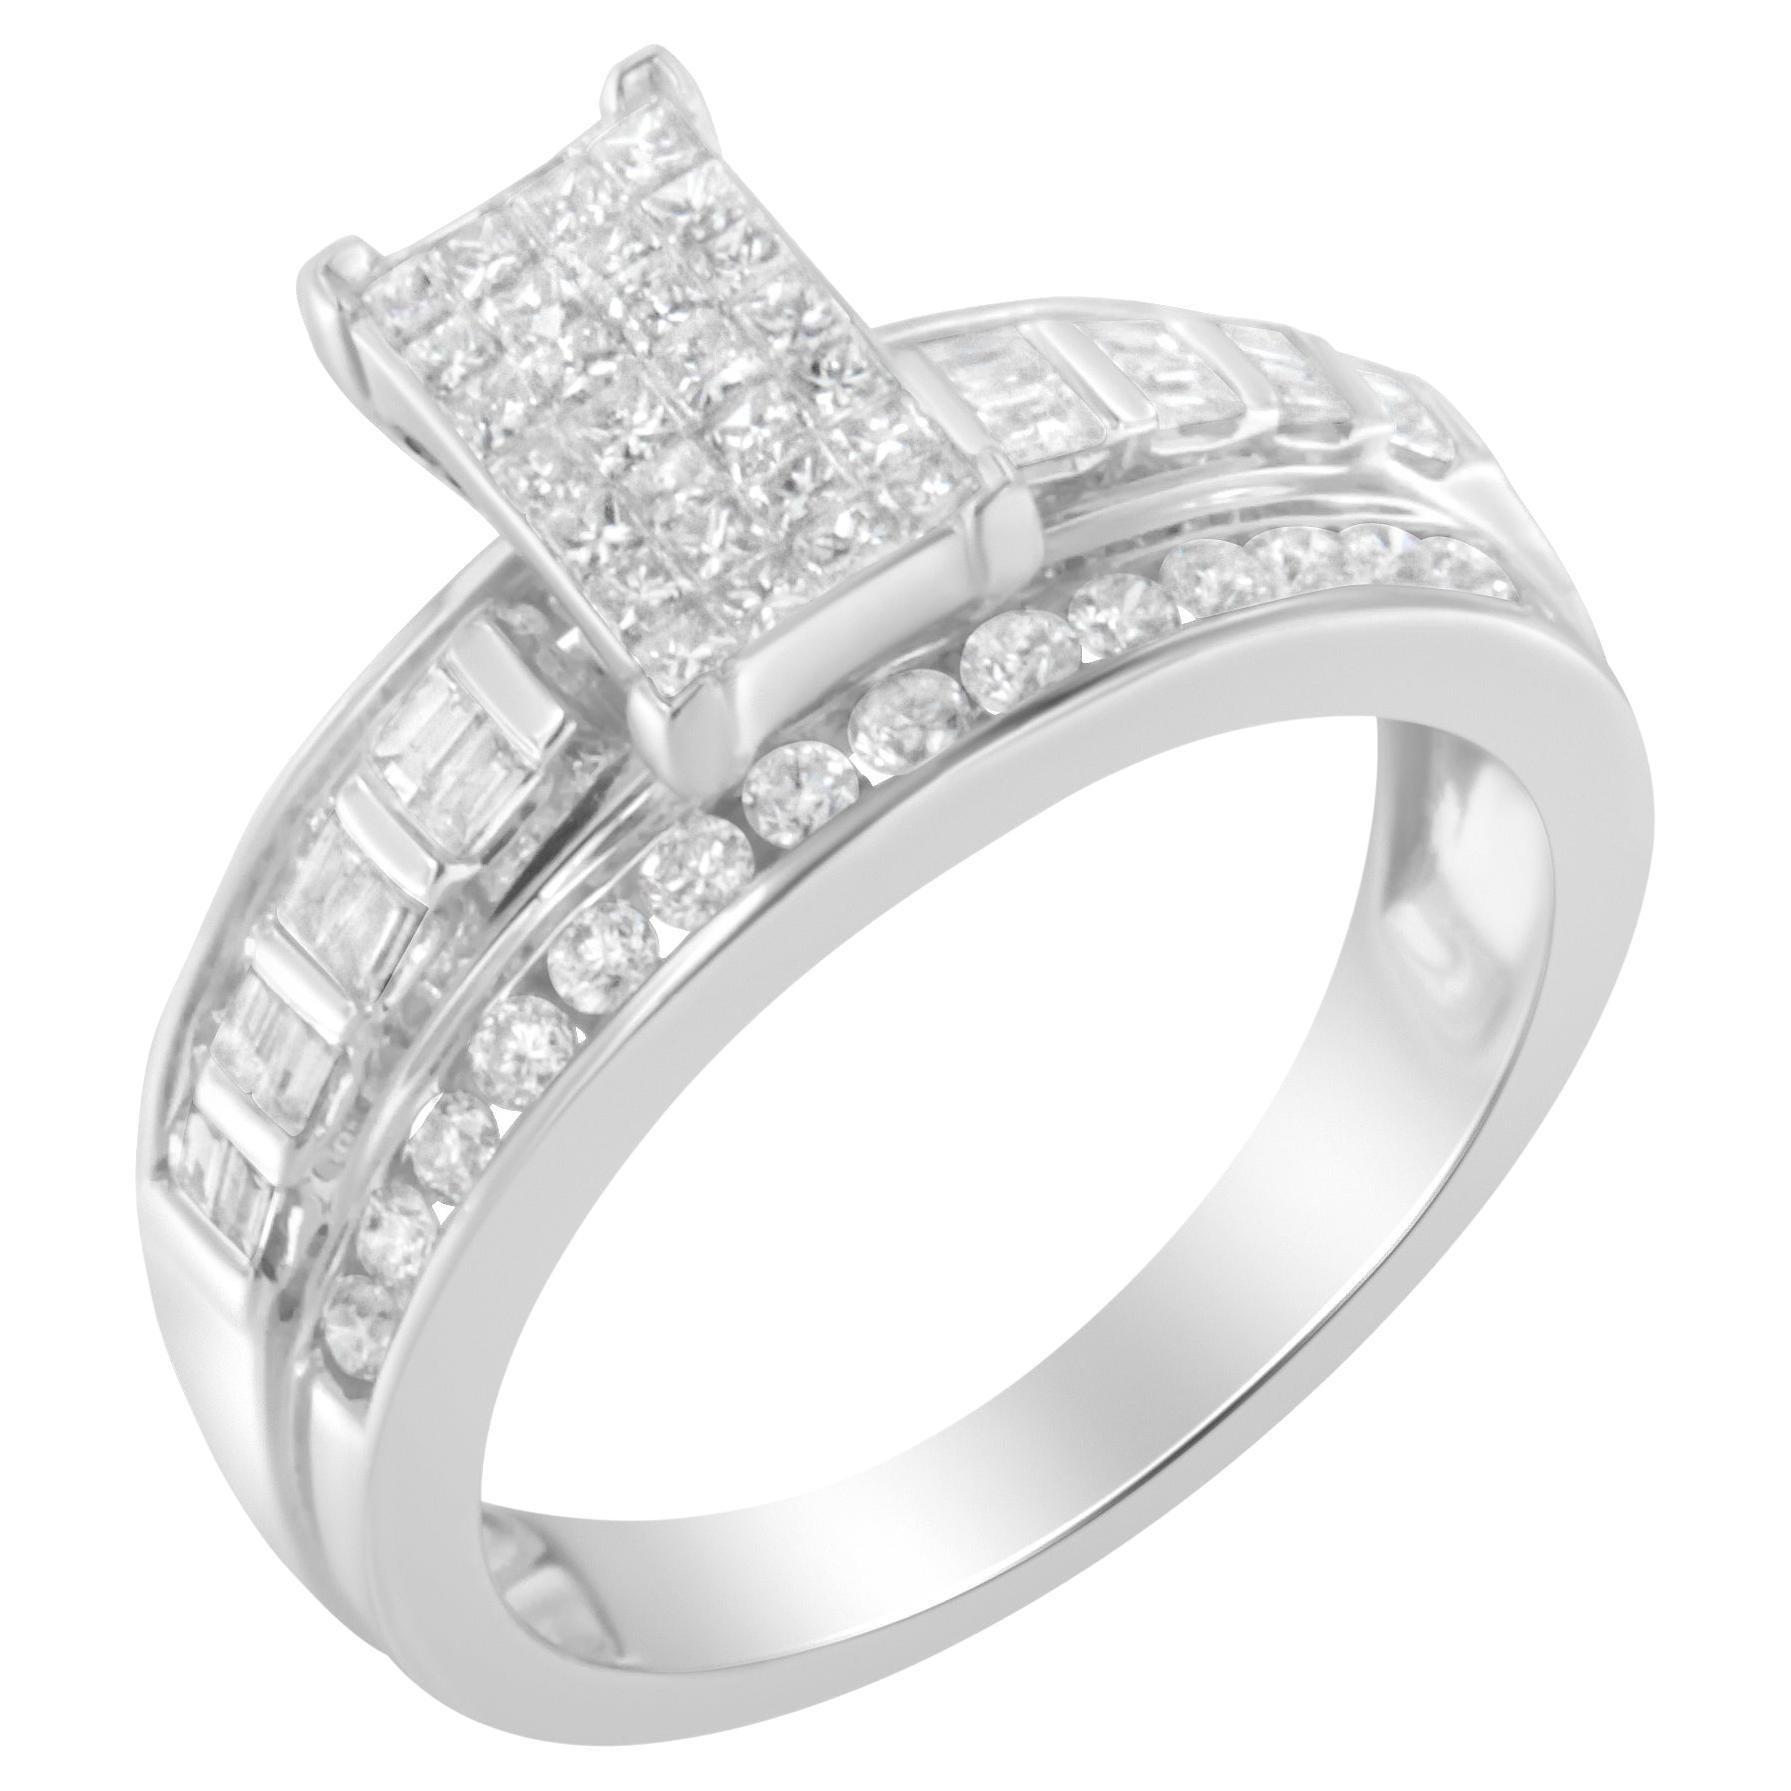 For Sale:  14k White Gold 1.00 Carat Diamond Composite Ring